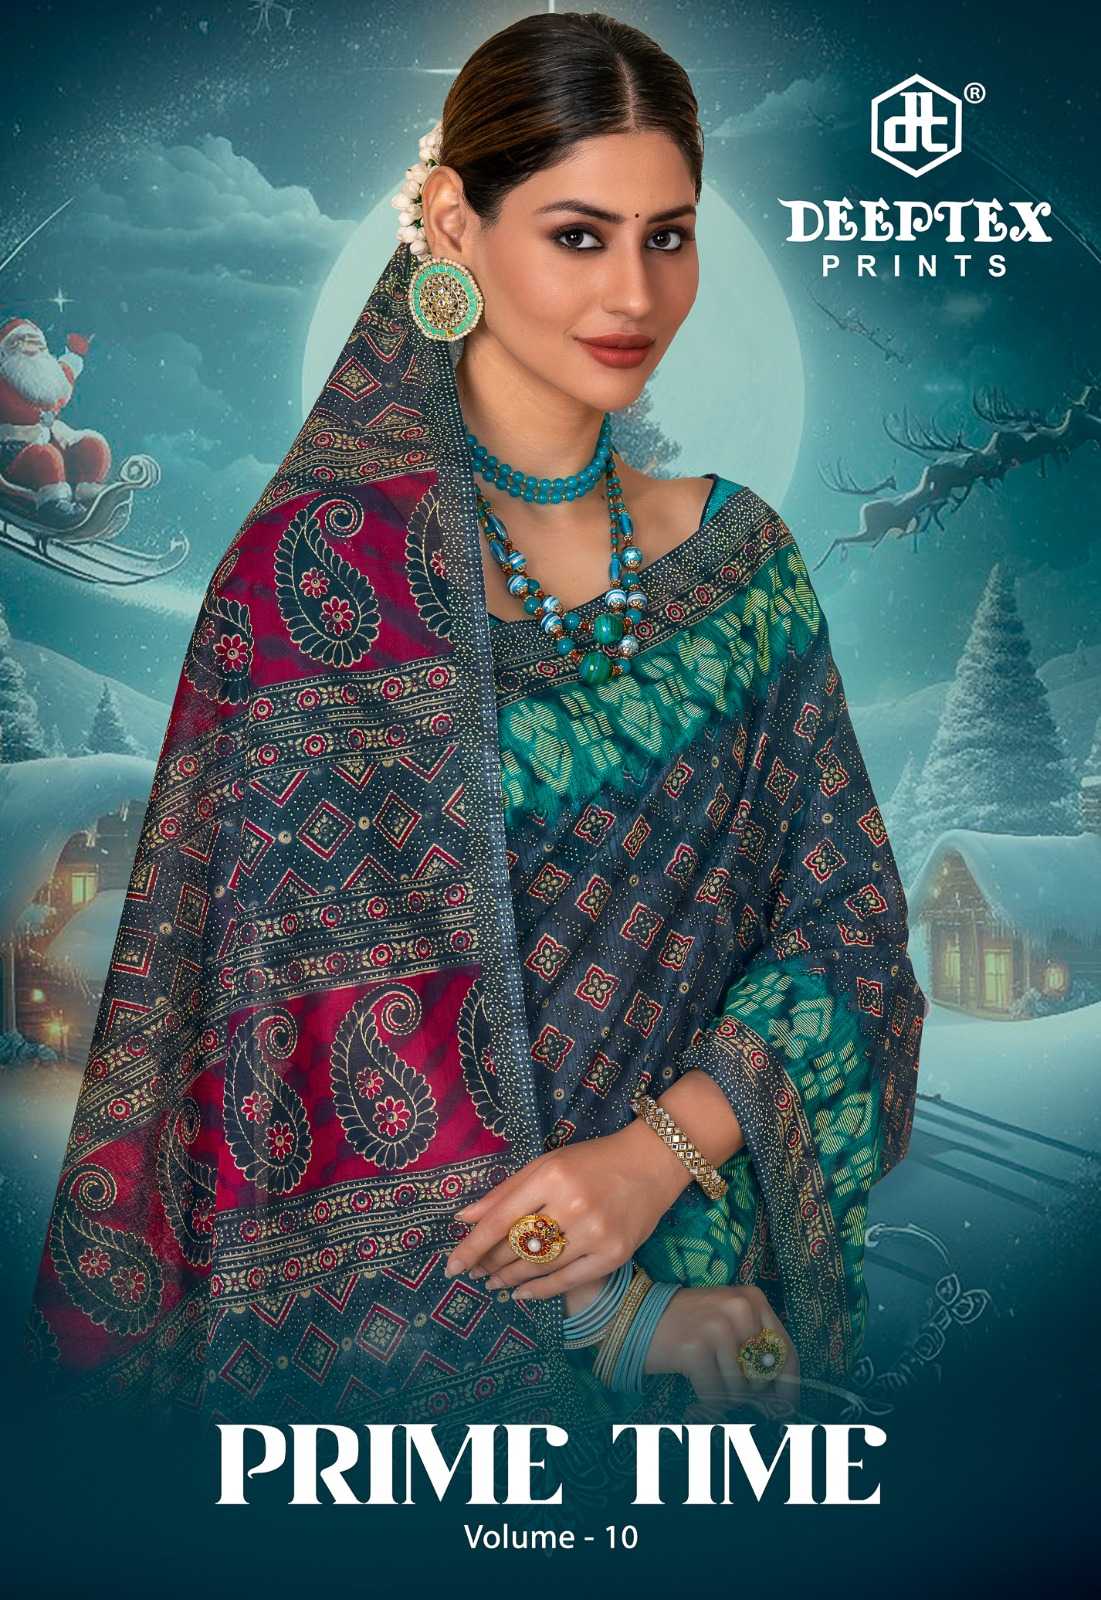 deeptex prints prime time vol 10 comfy to wear beautiful cotton sarees